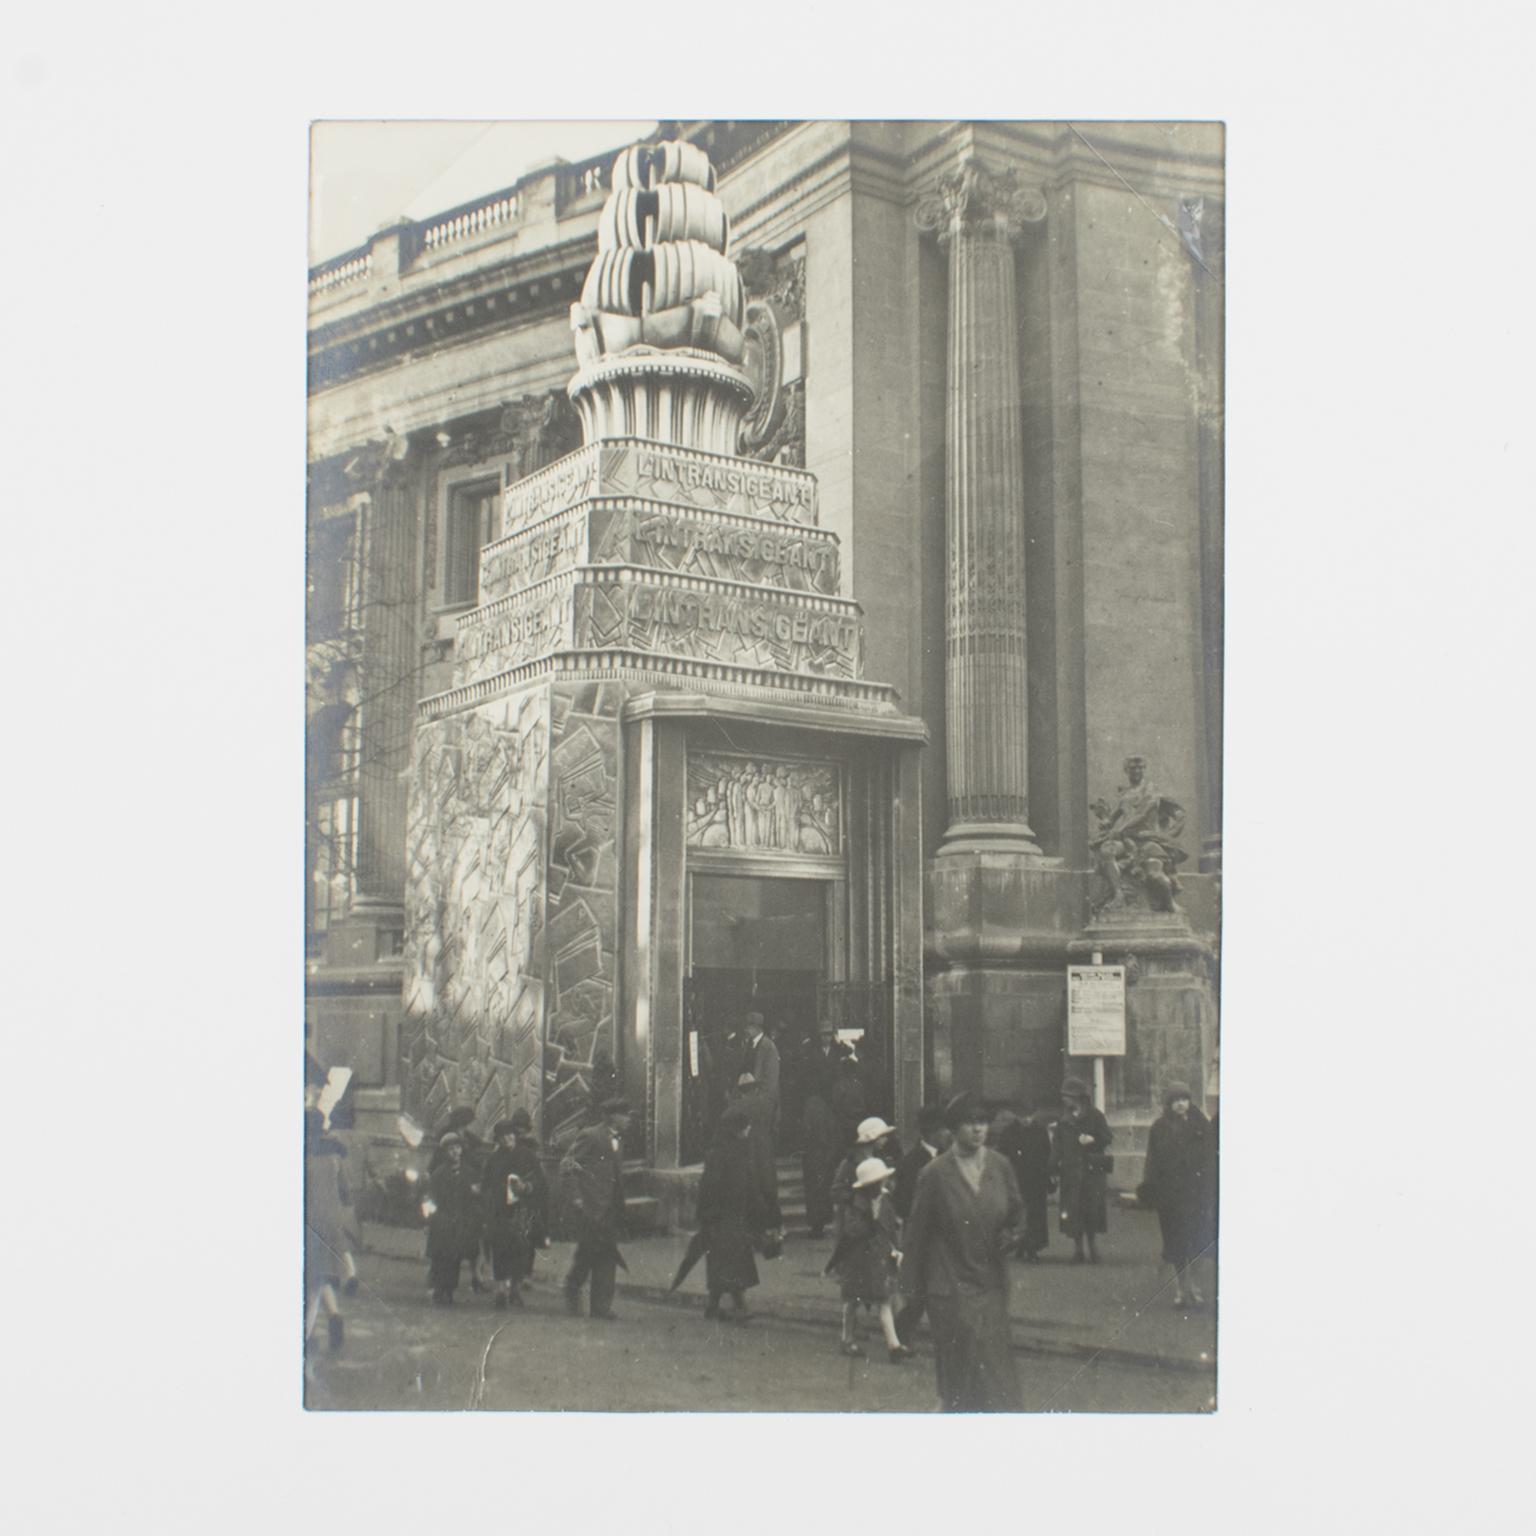 A unique original silver gelatin black and white photograph by Press Agency, Paris 1925.
International Decorative Arts Exhibition in Paris, 1925, French newspaper pavilion. L'intransigeant (